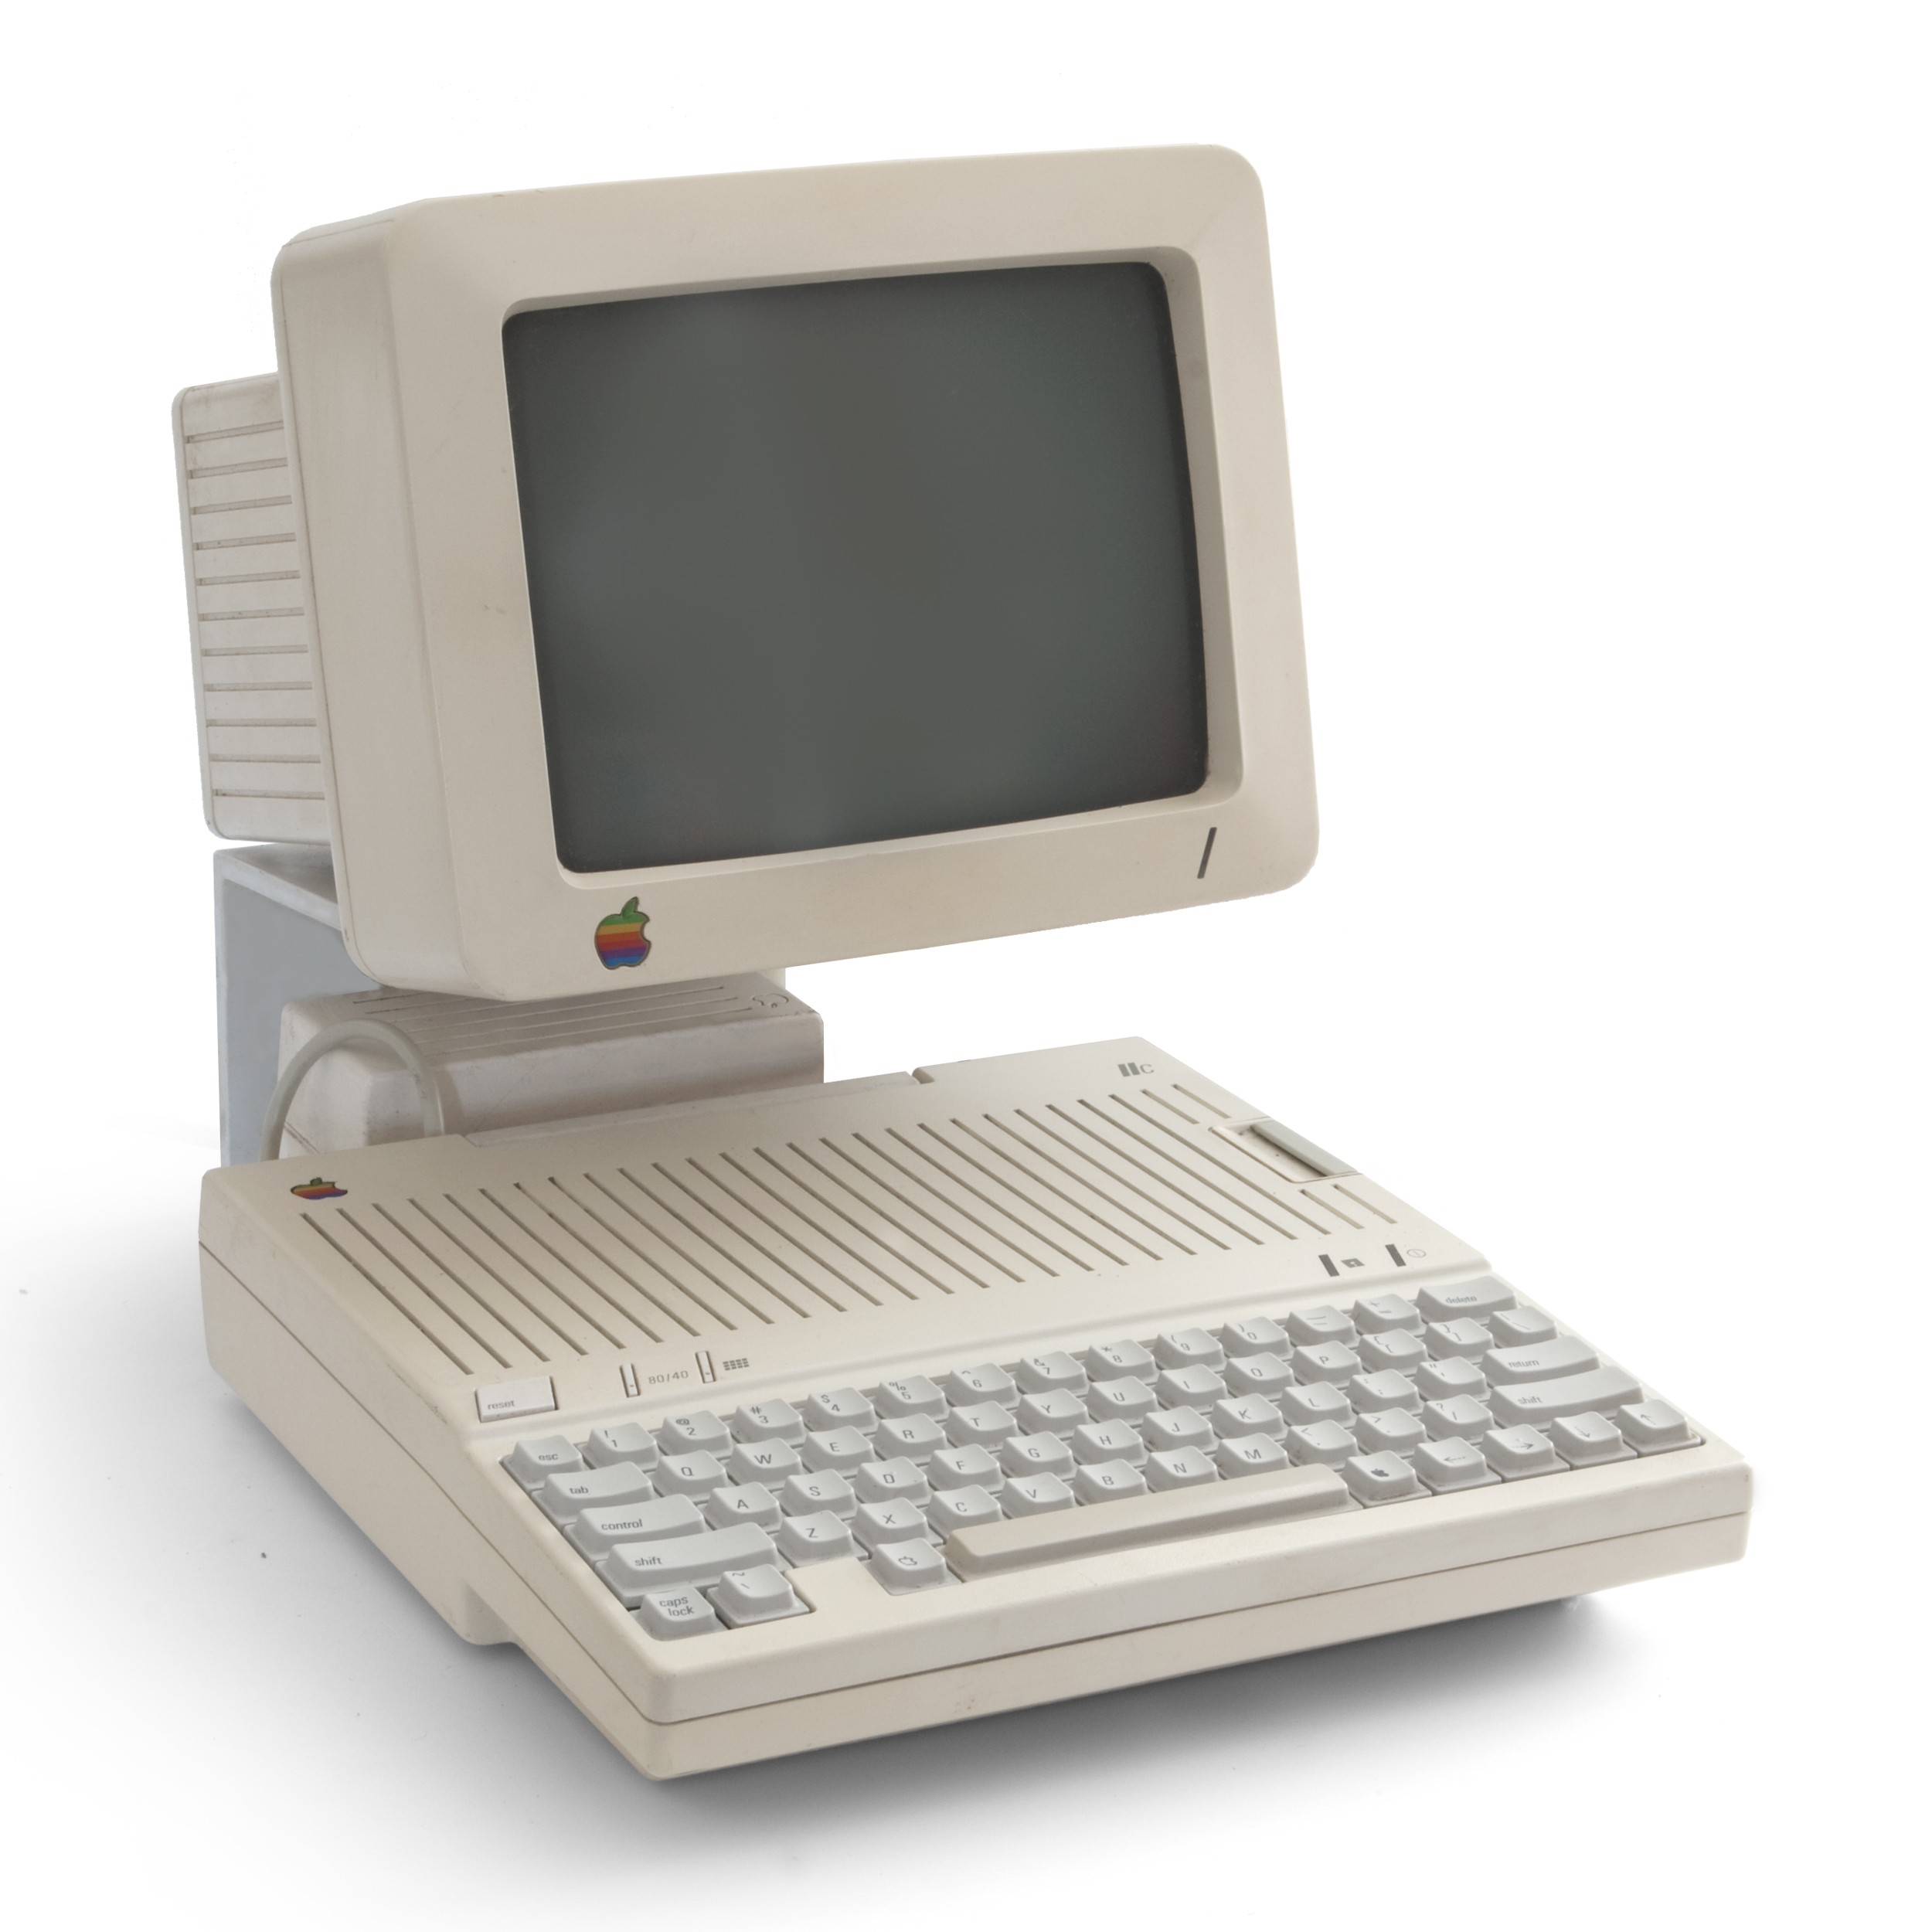 封面圖片來源：https://en.wikipedia.org/wiki/Apple_IIc